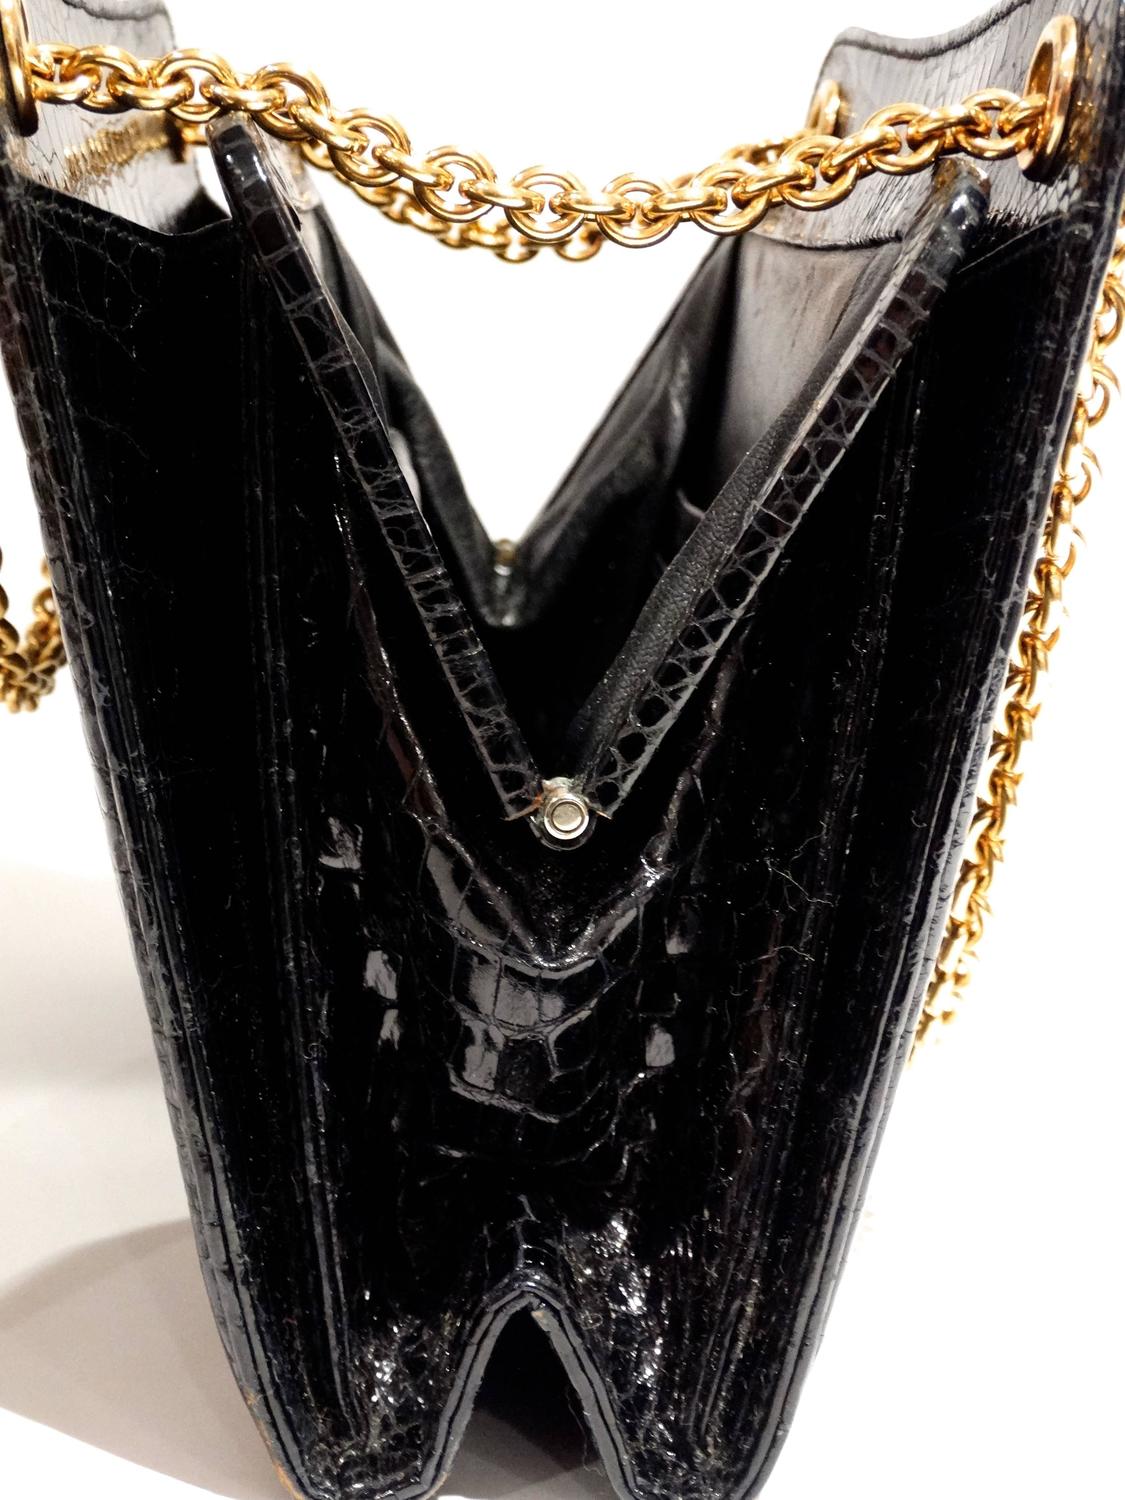 Rare 1950s Gucci Black Crocodile Handbag at 1stdibs